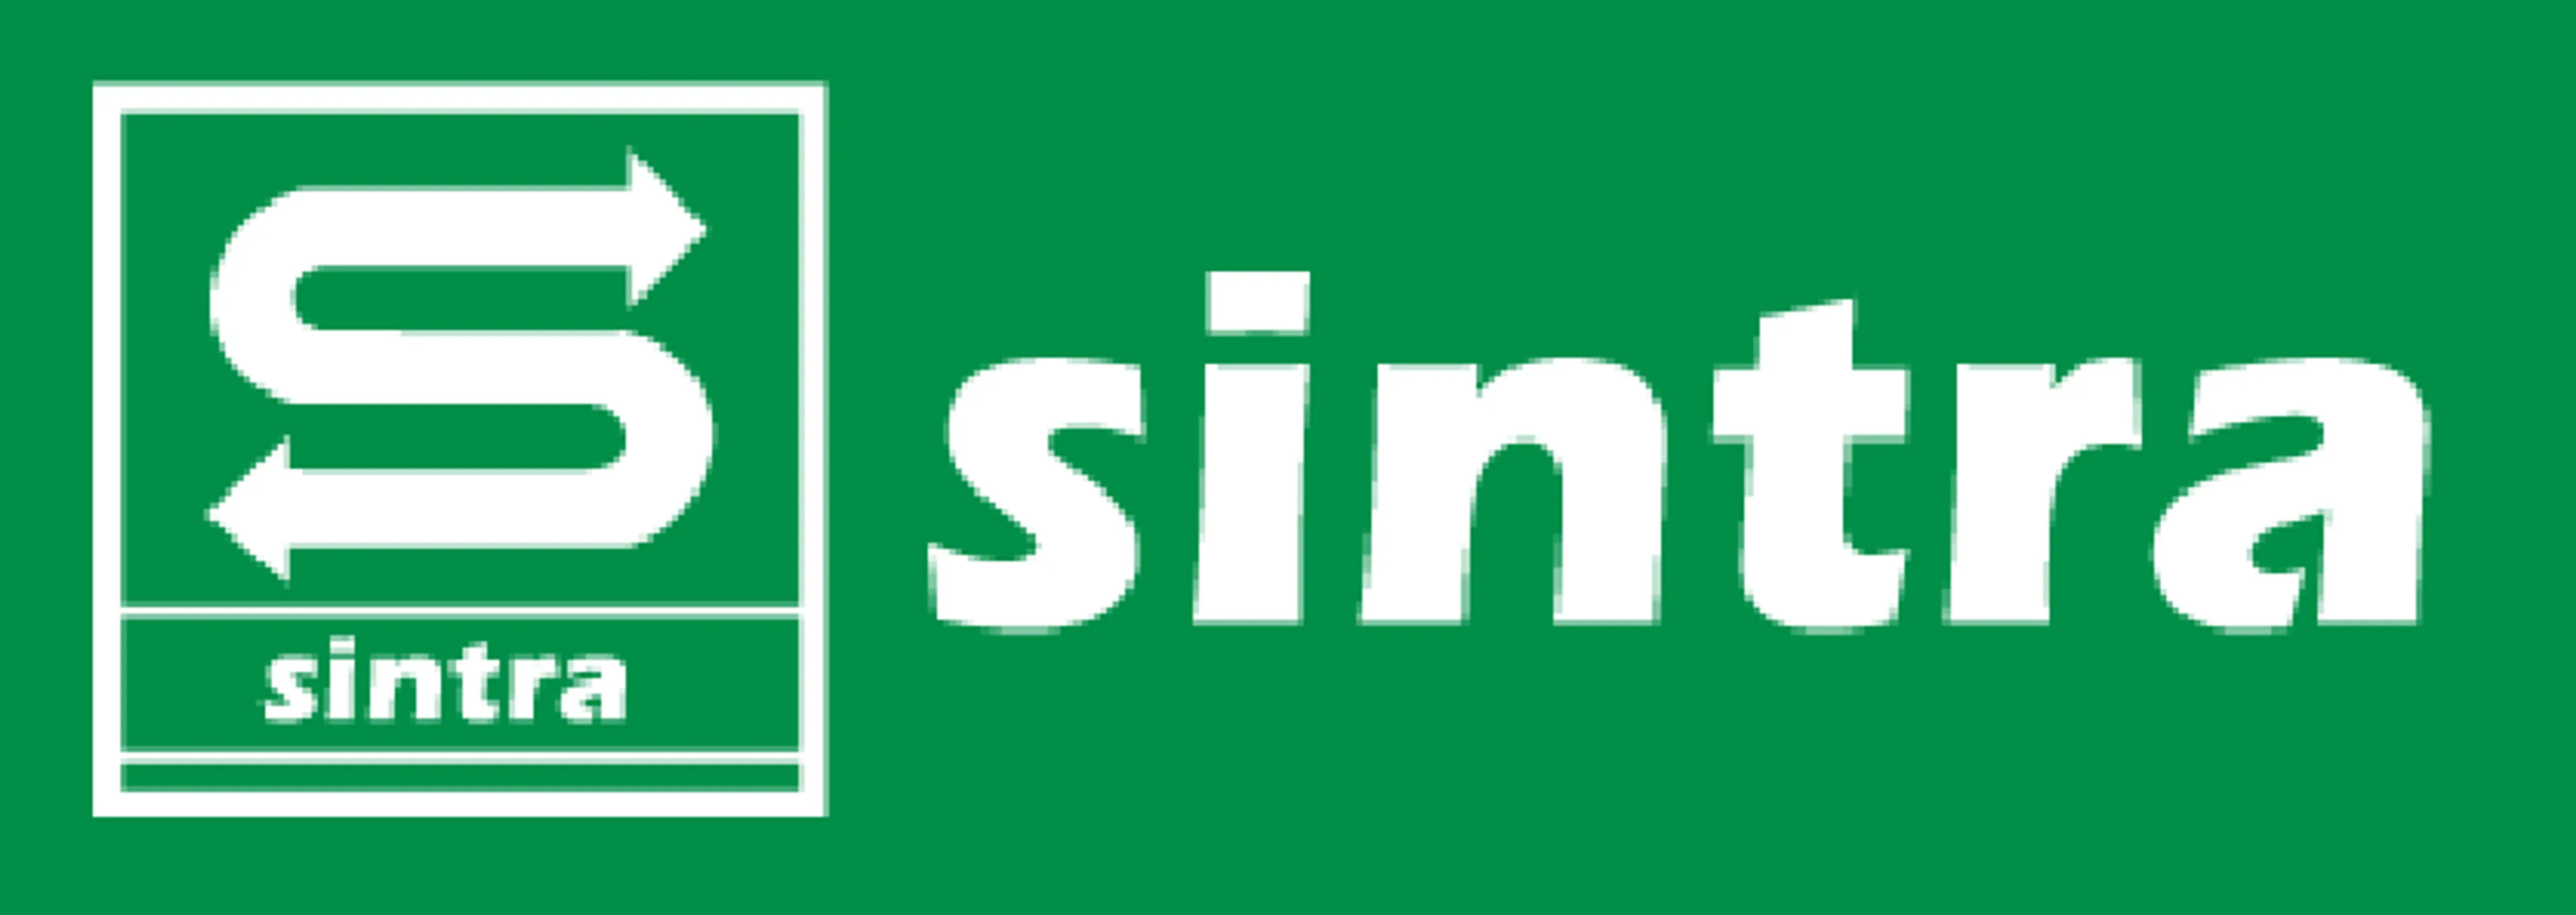 SINTRA logo